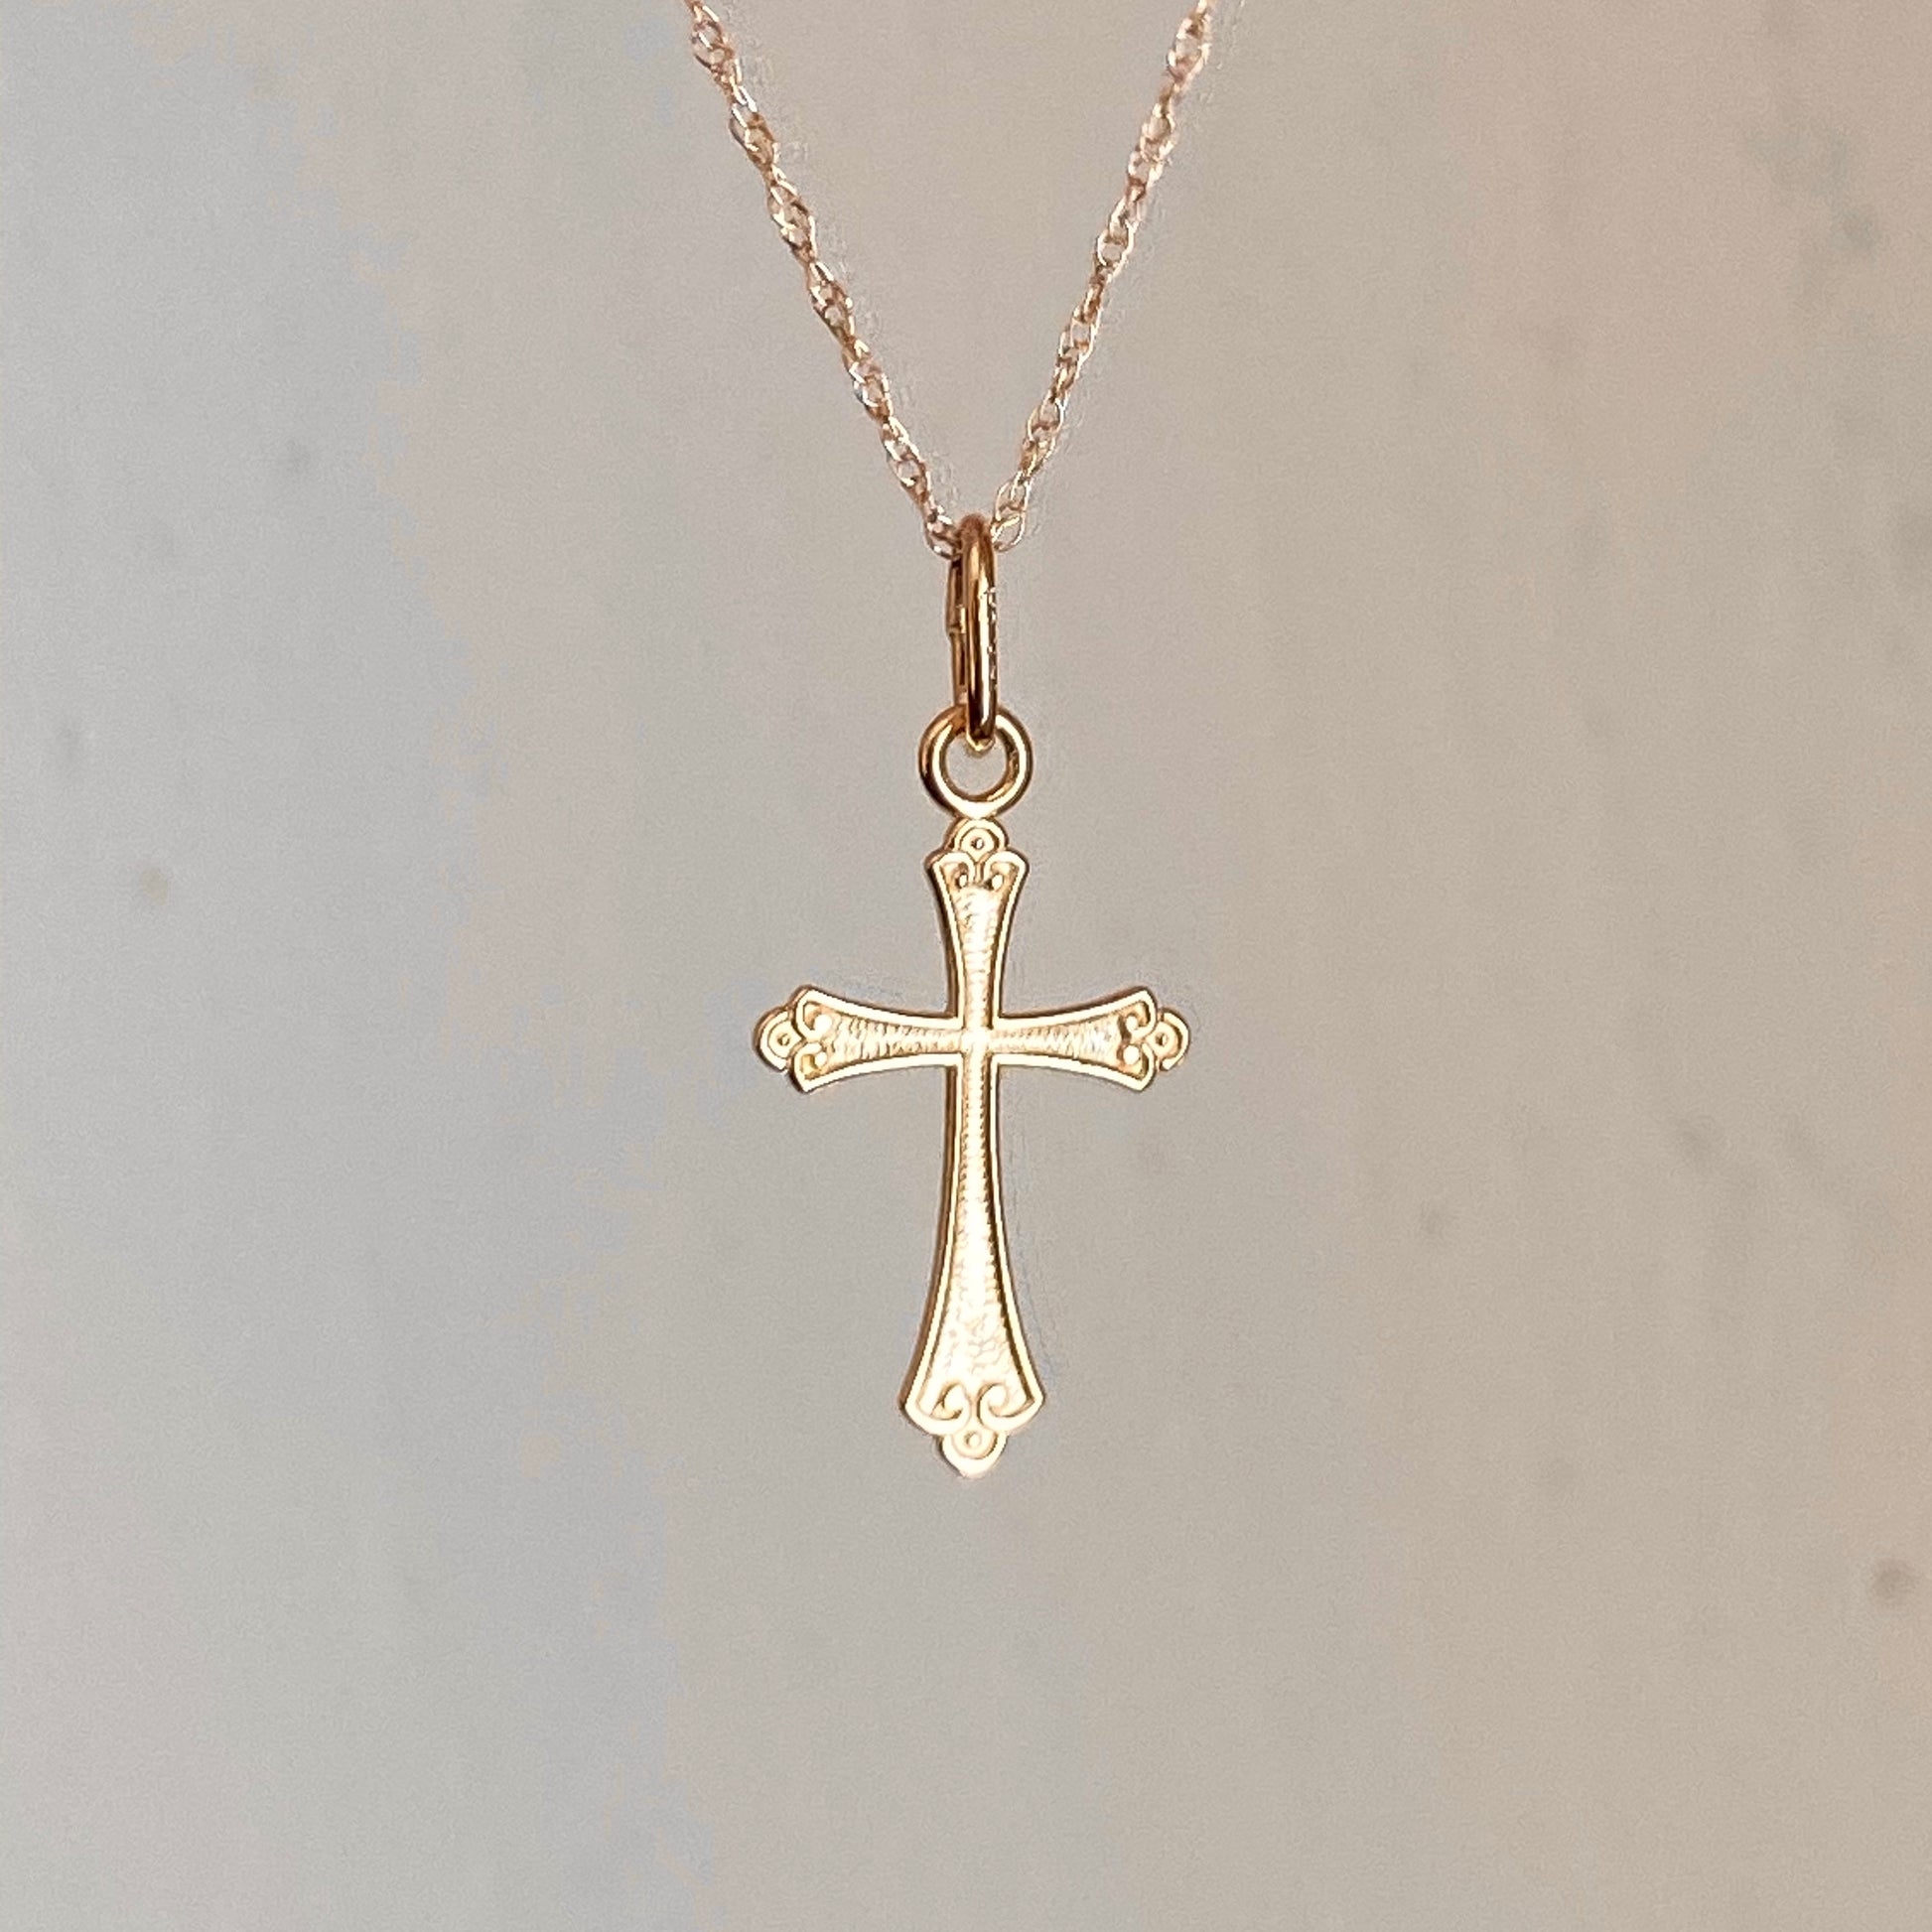 14KT Yellow Gold Textured Small Cross Pendant Chain Necklace, 14KT Yellow Gold Textured Small Cross Pendant Chain Necklace - Legacy Saint Jewelry